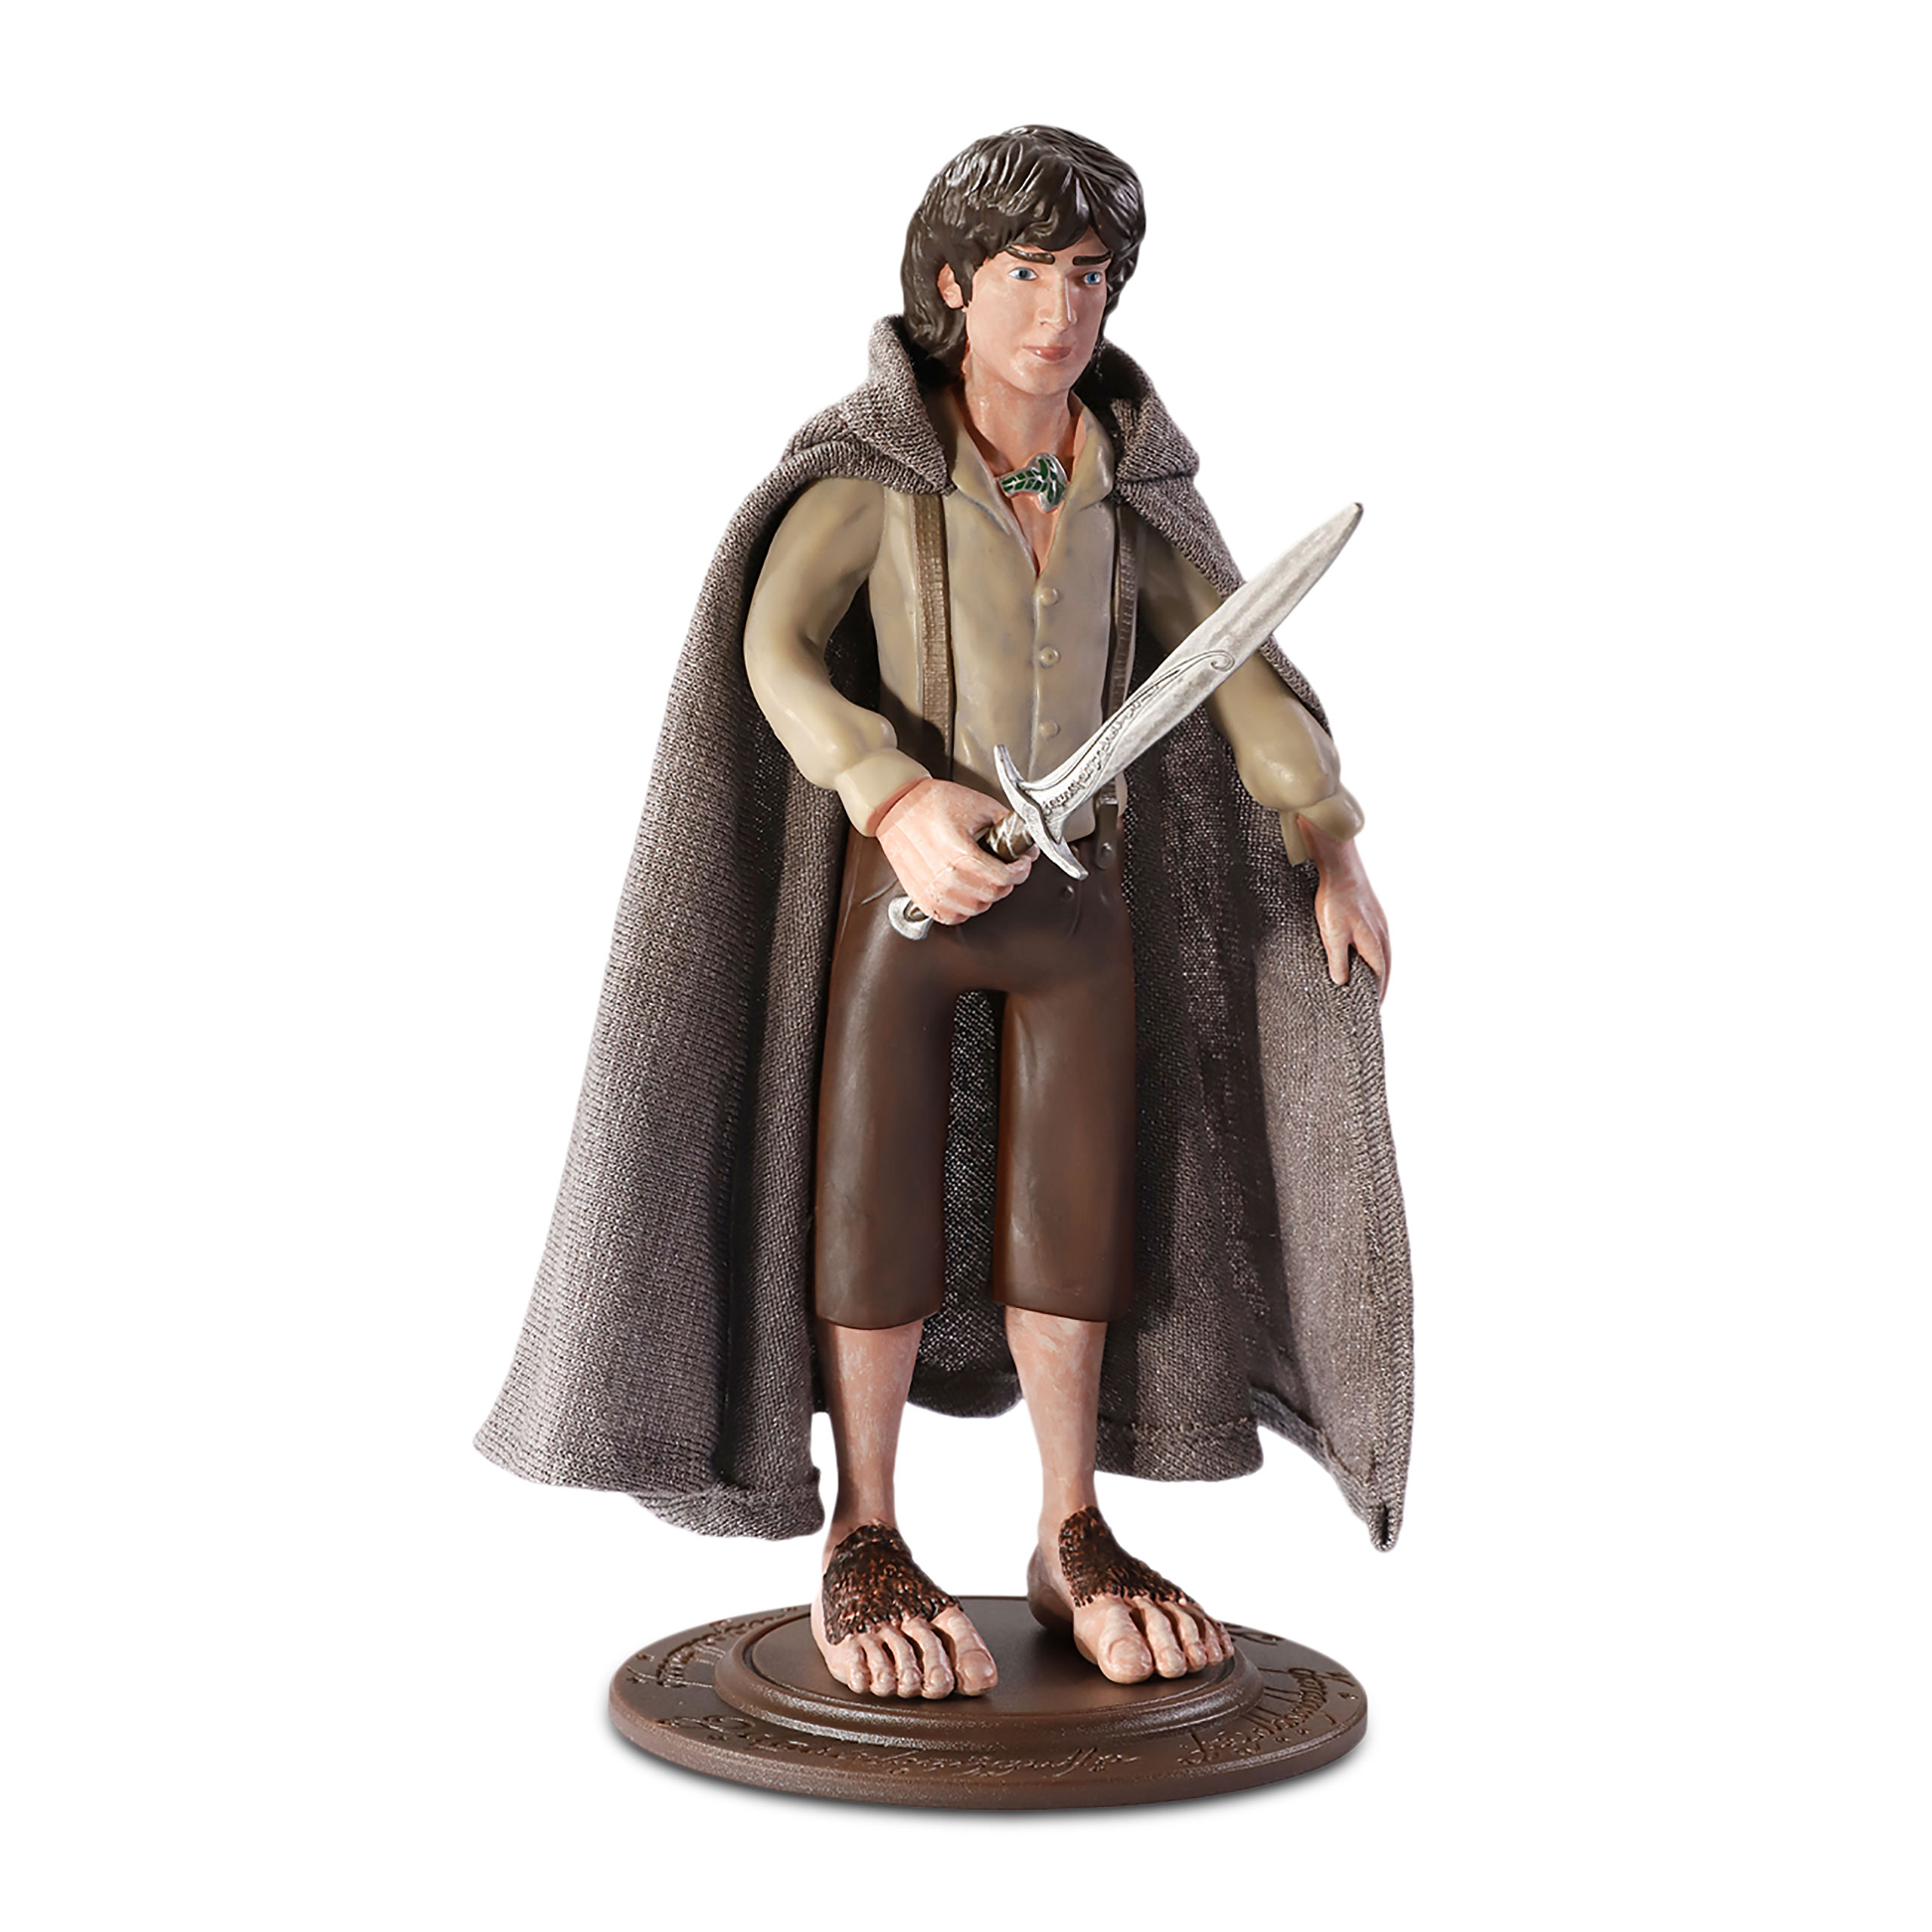 Herr der Ringe - Frodo Bendyfigs Figur 18 cm